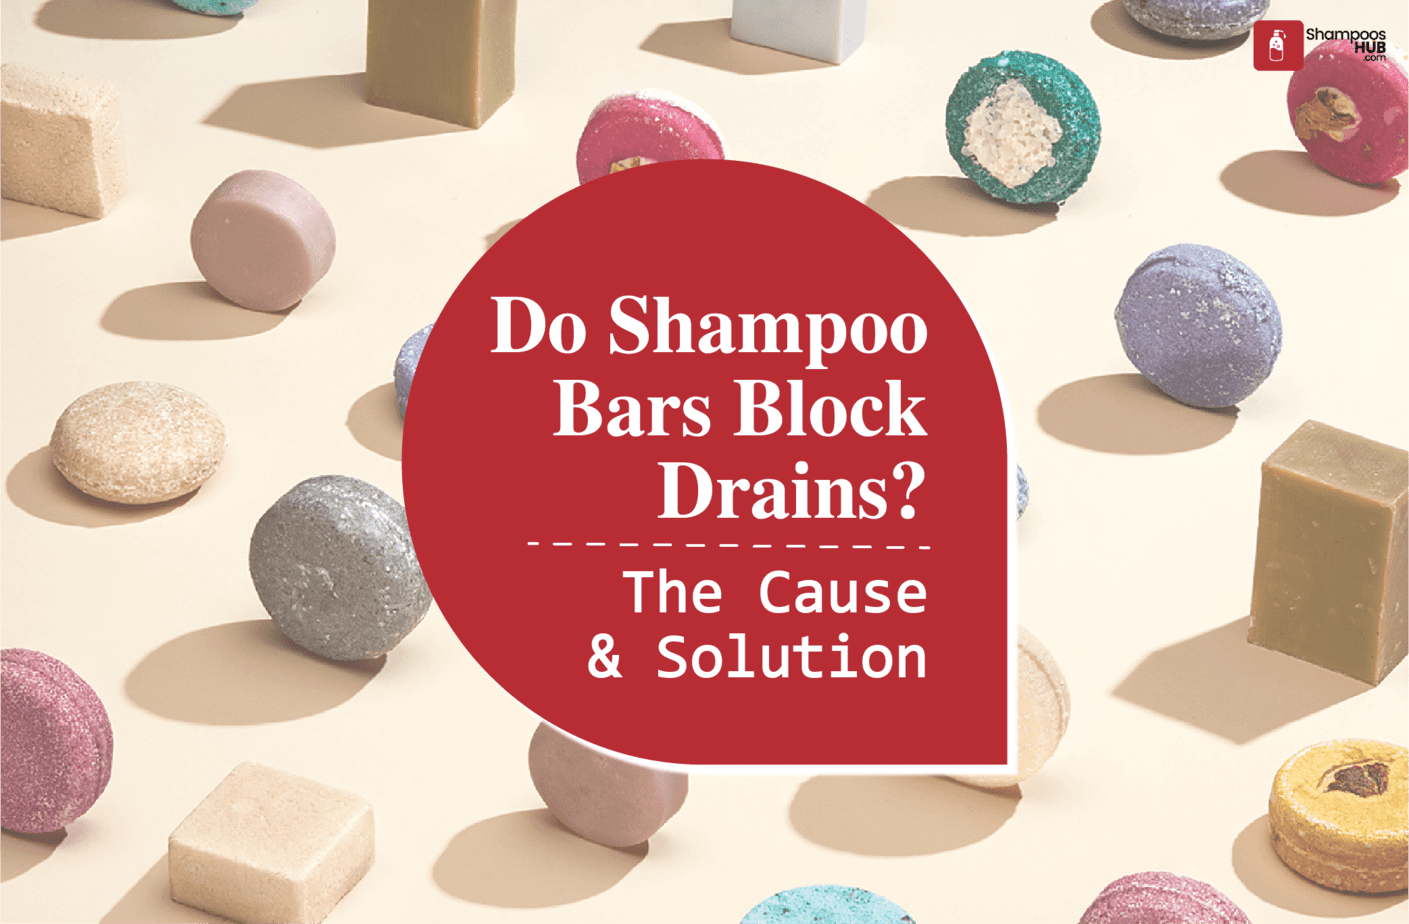 Do Shampoo Bars Block Drains?